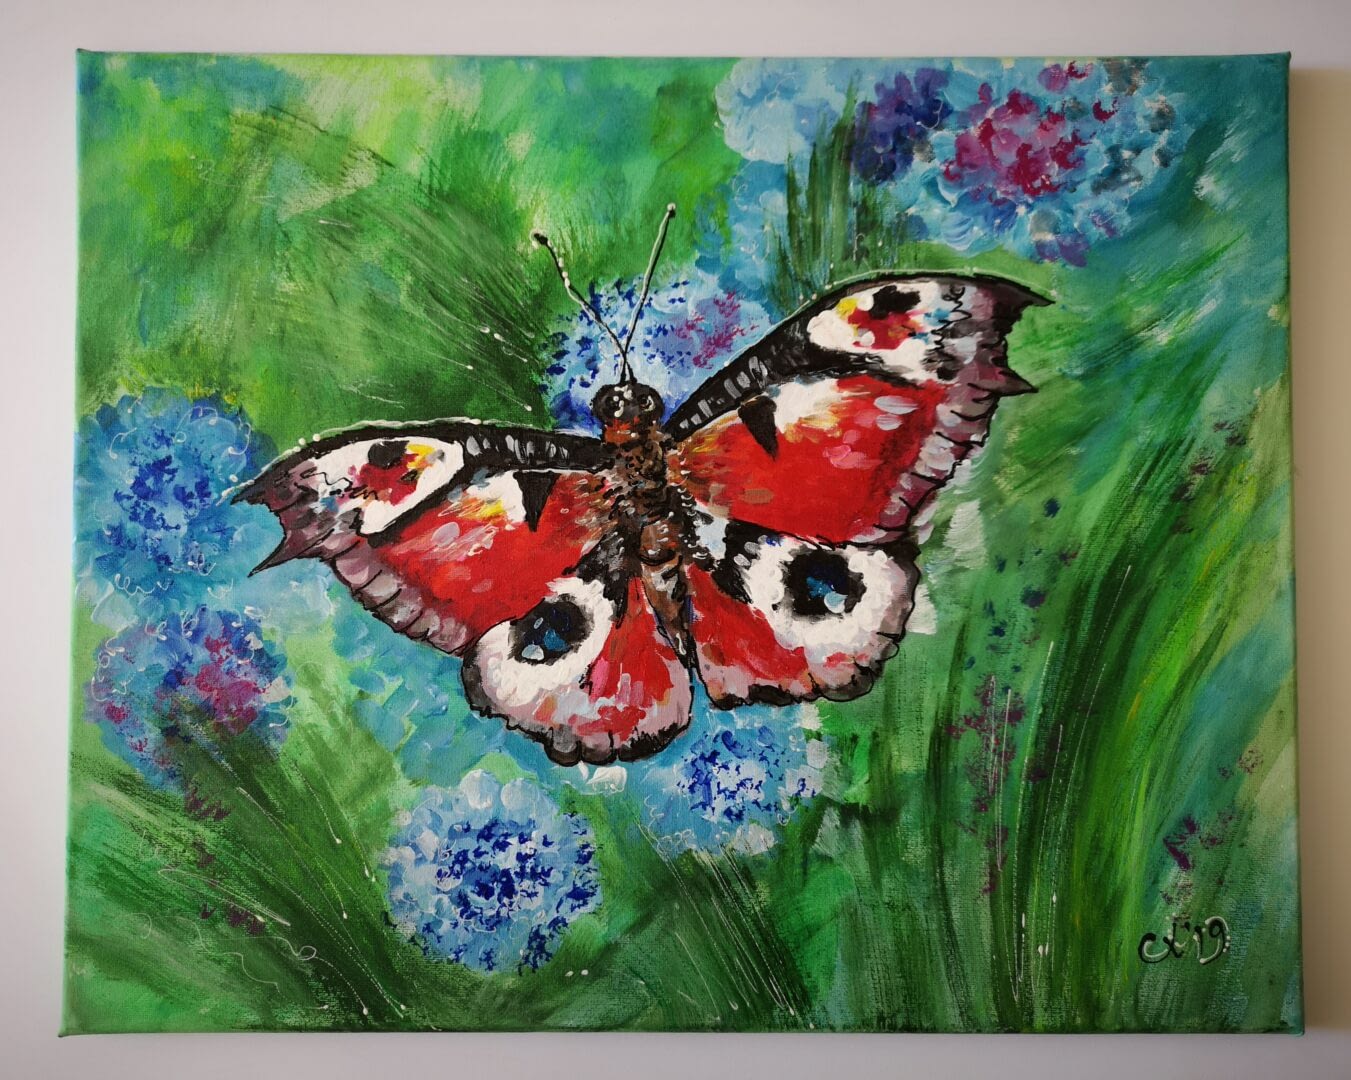 Acrylic Butterfly